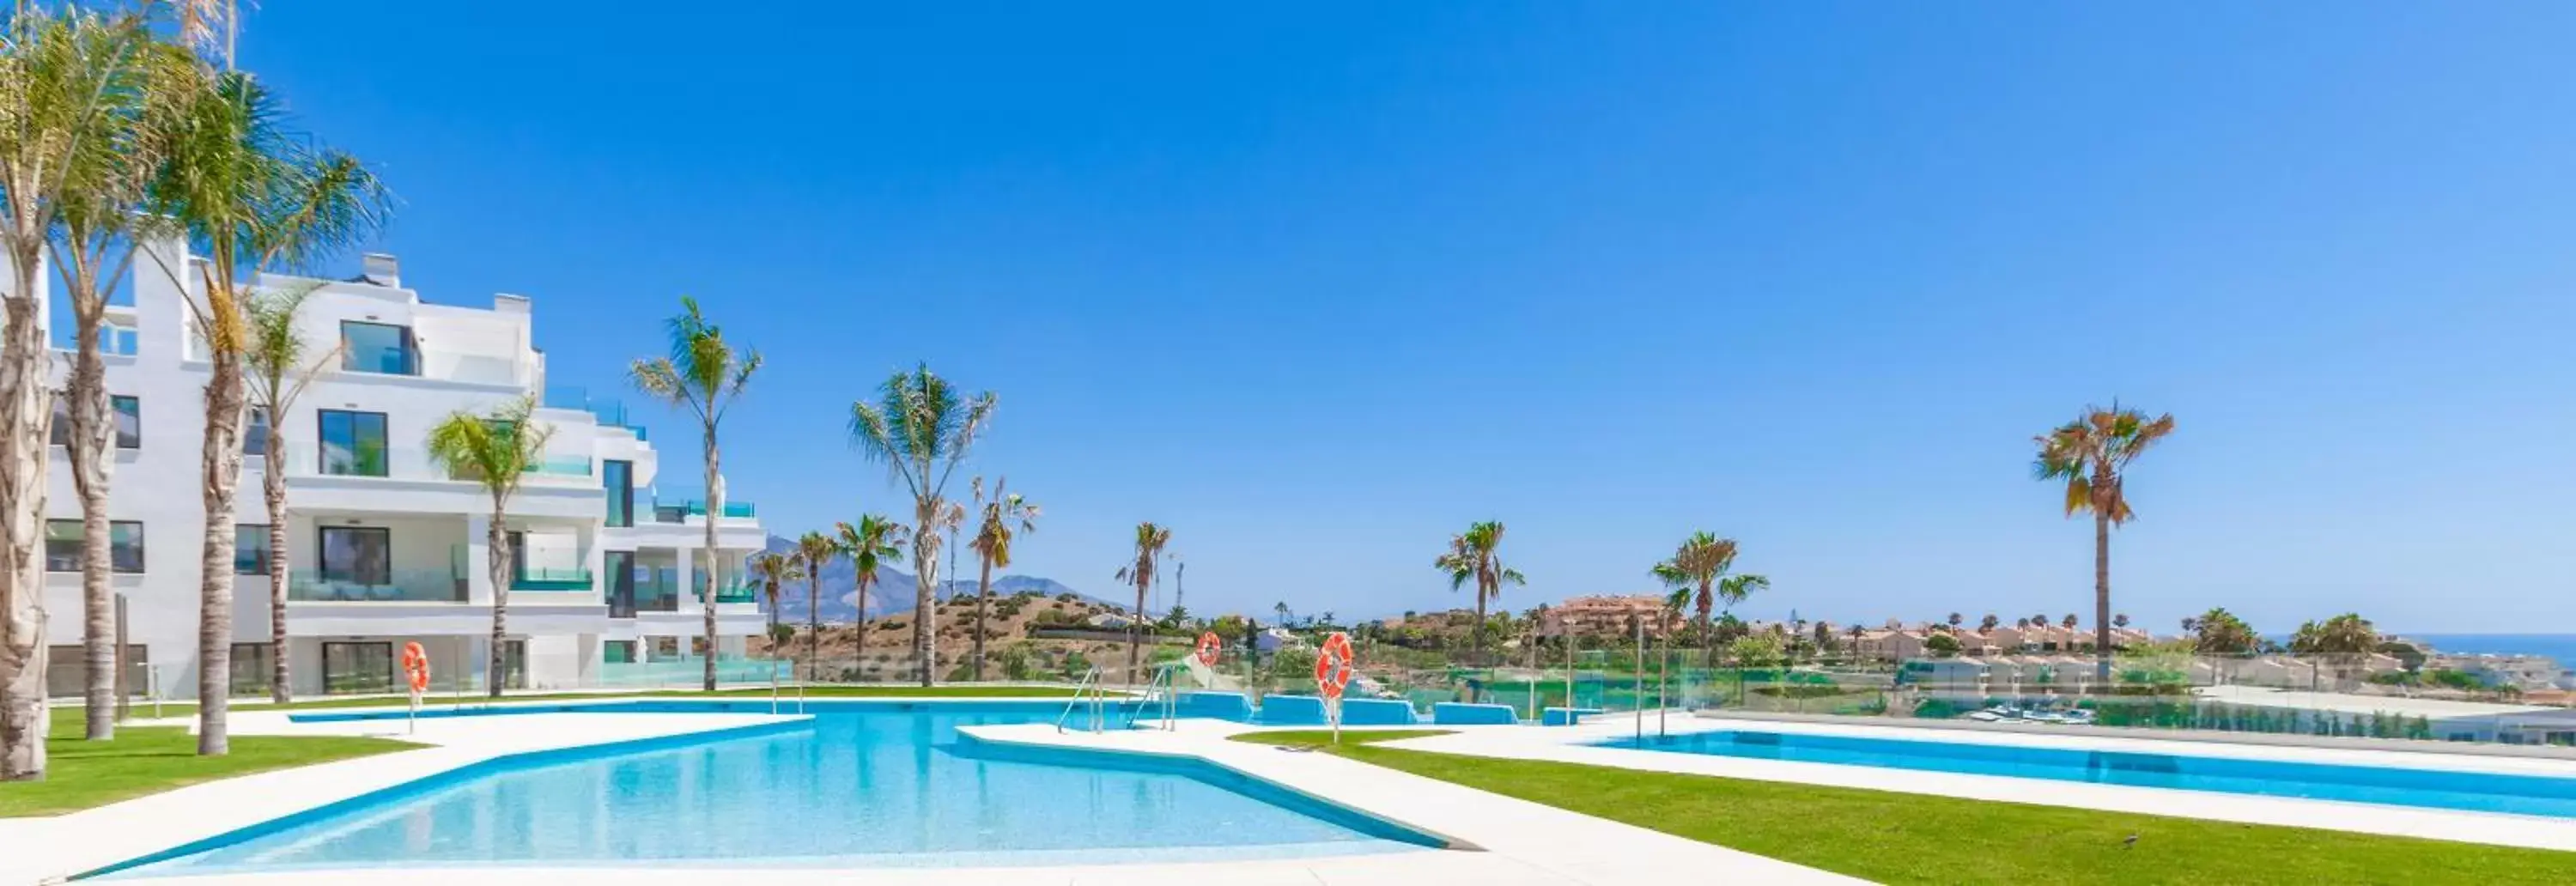 Swimming Pool in Wyndham Grand Residences Costa del Sol